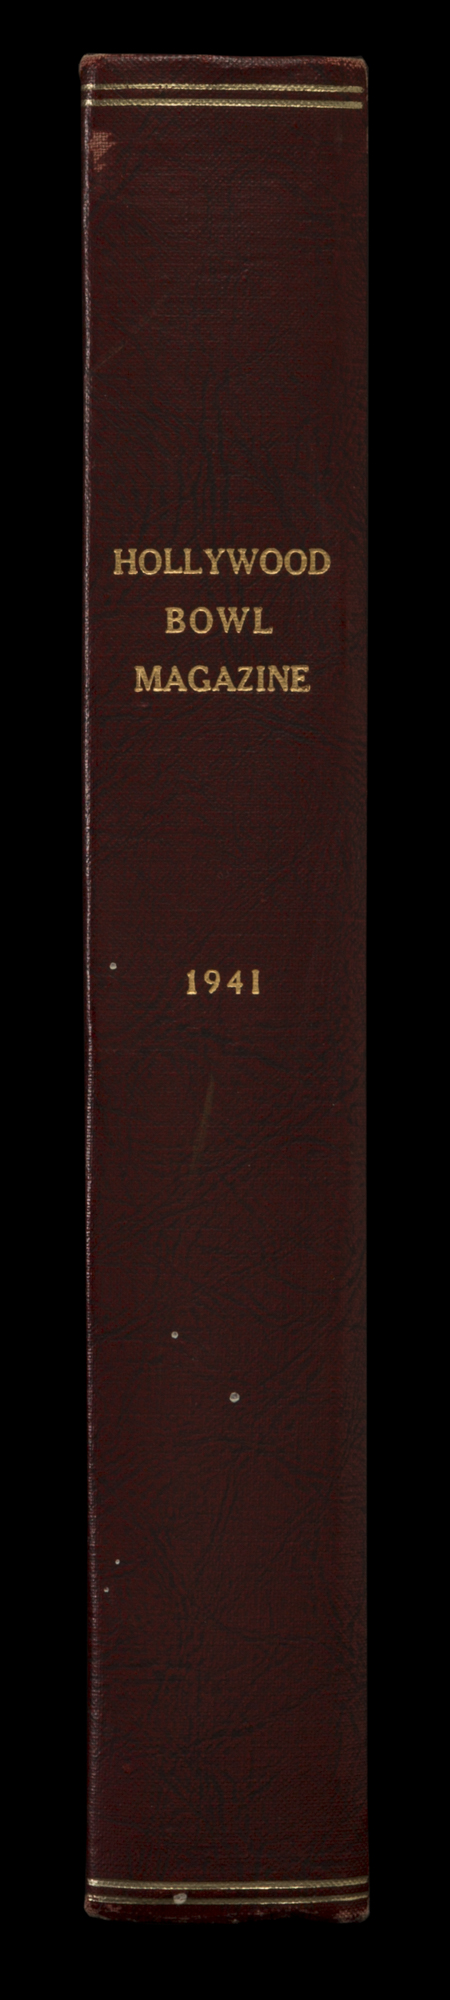 HB_ProgramBook_Spine_1941.jpg